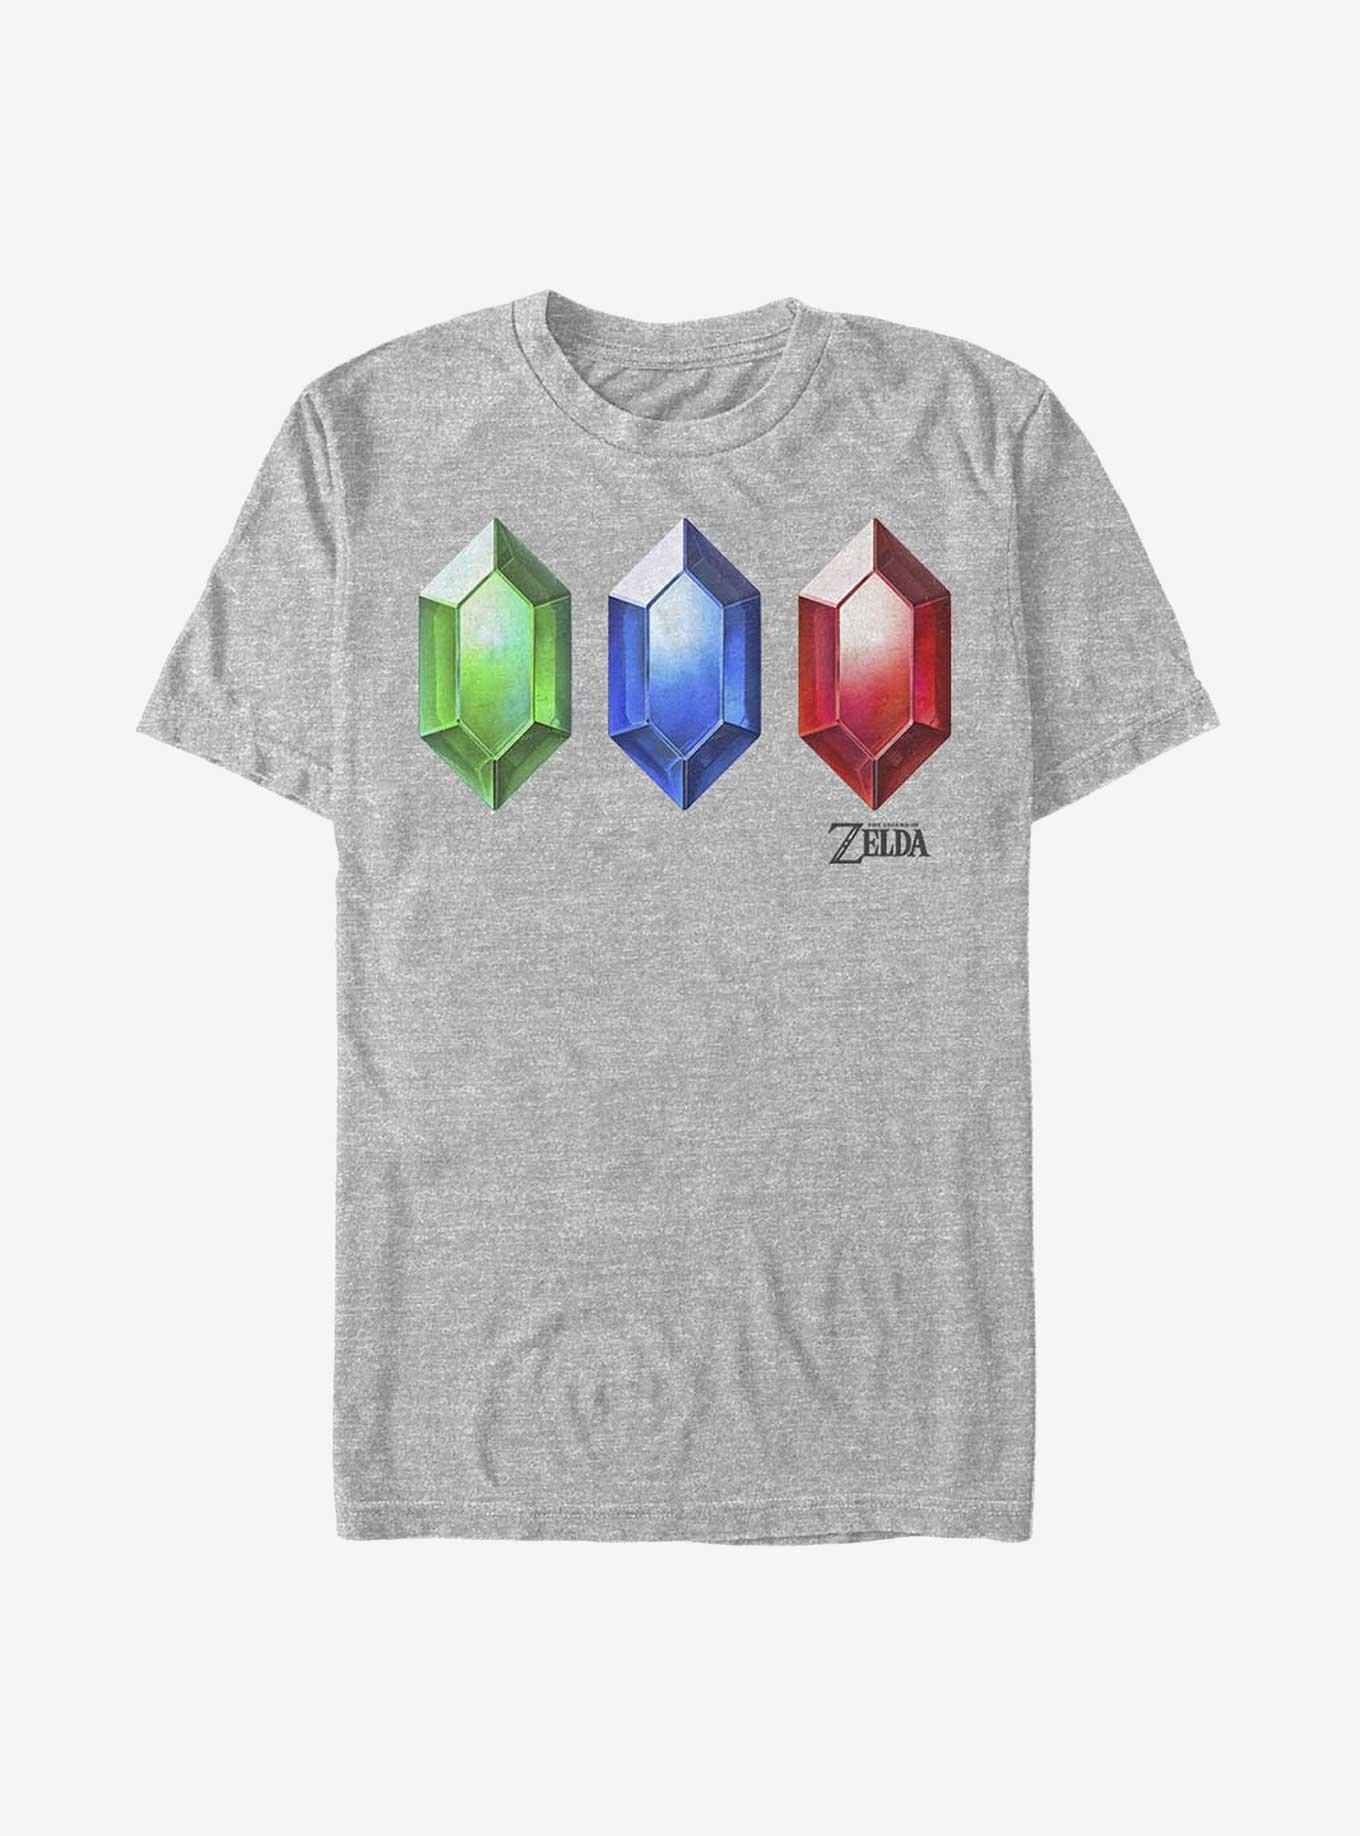 Nintendo The Legend of Zelda Rupees T-Shirt